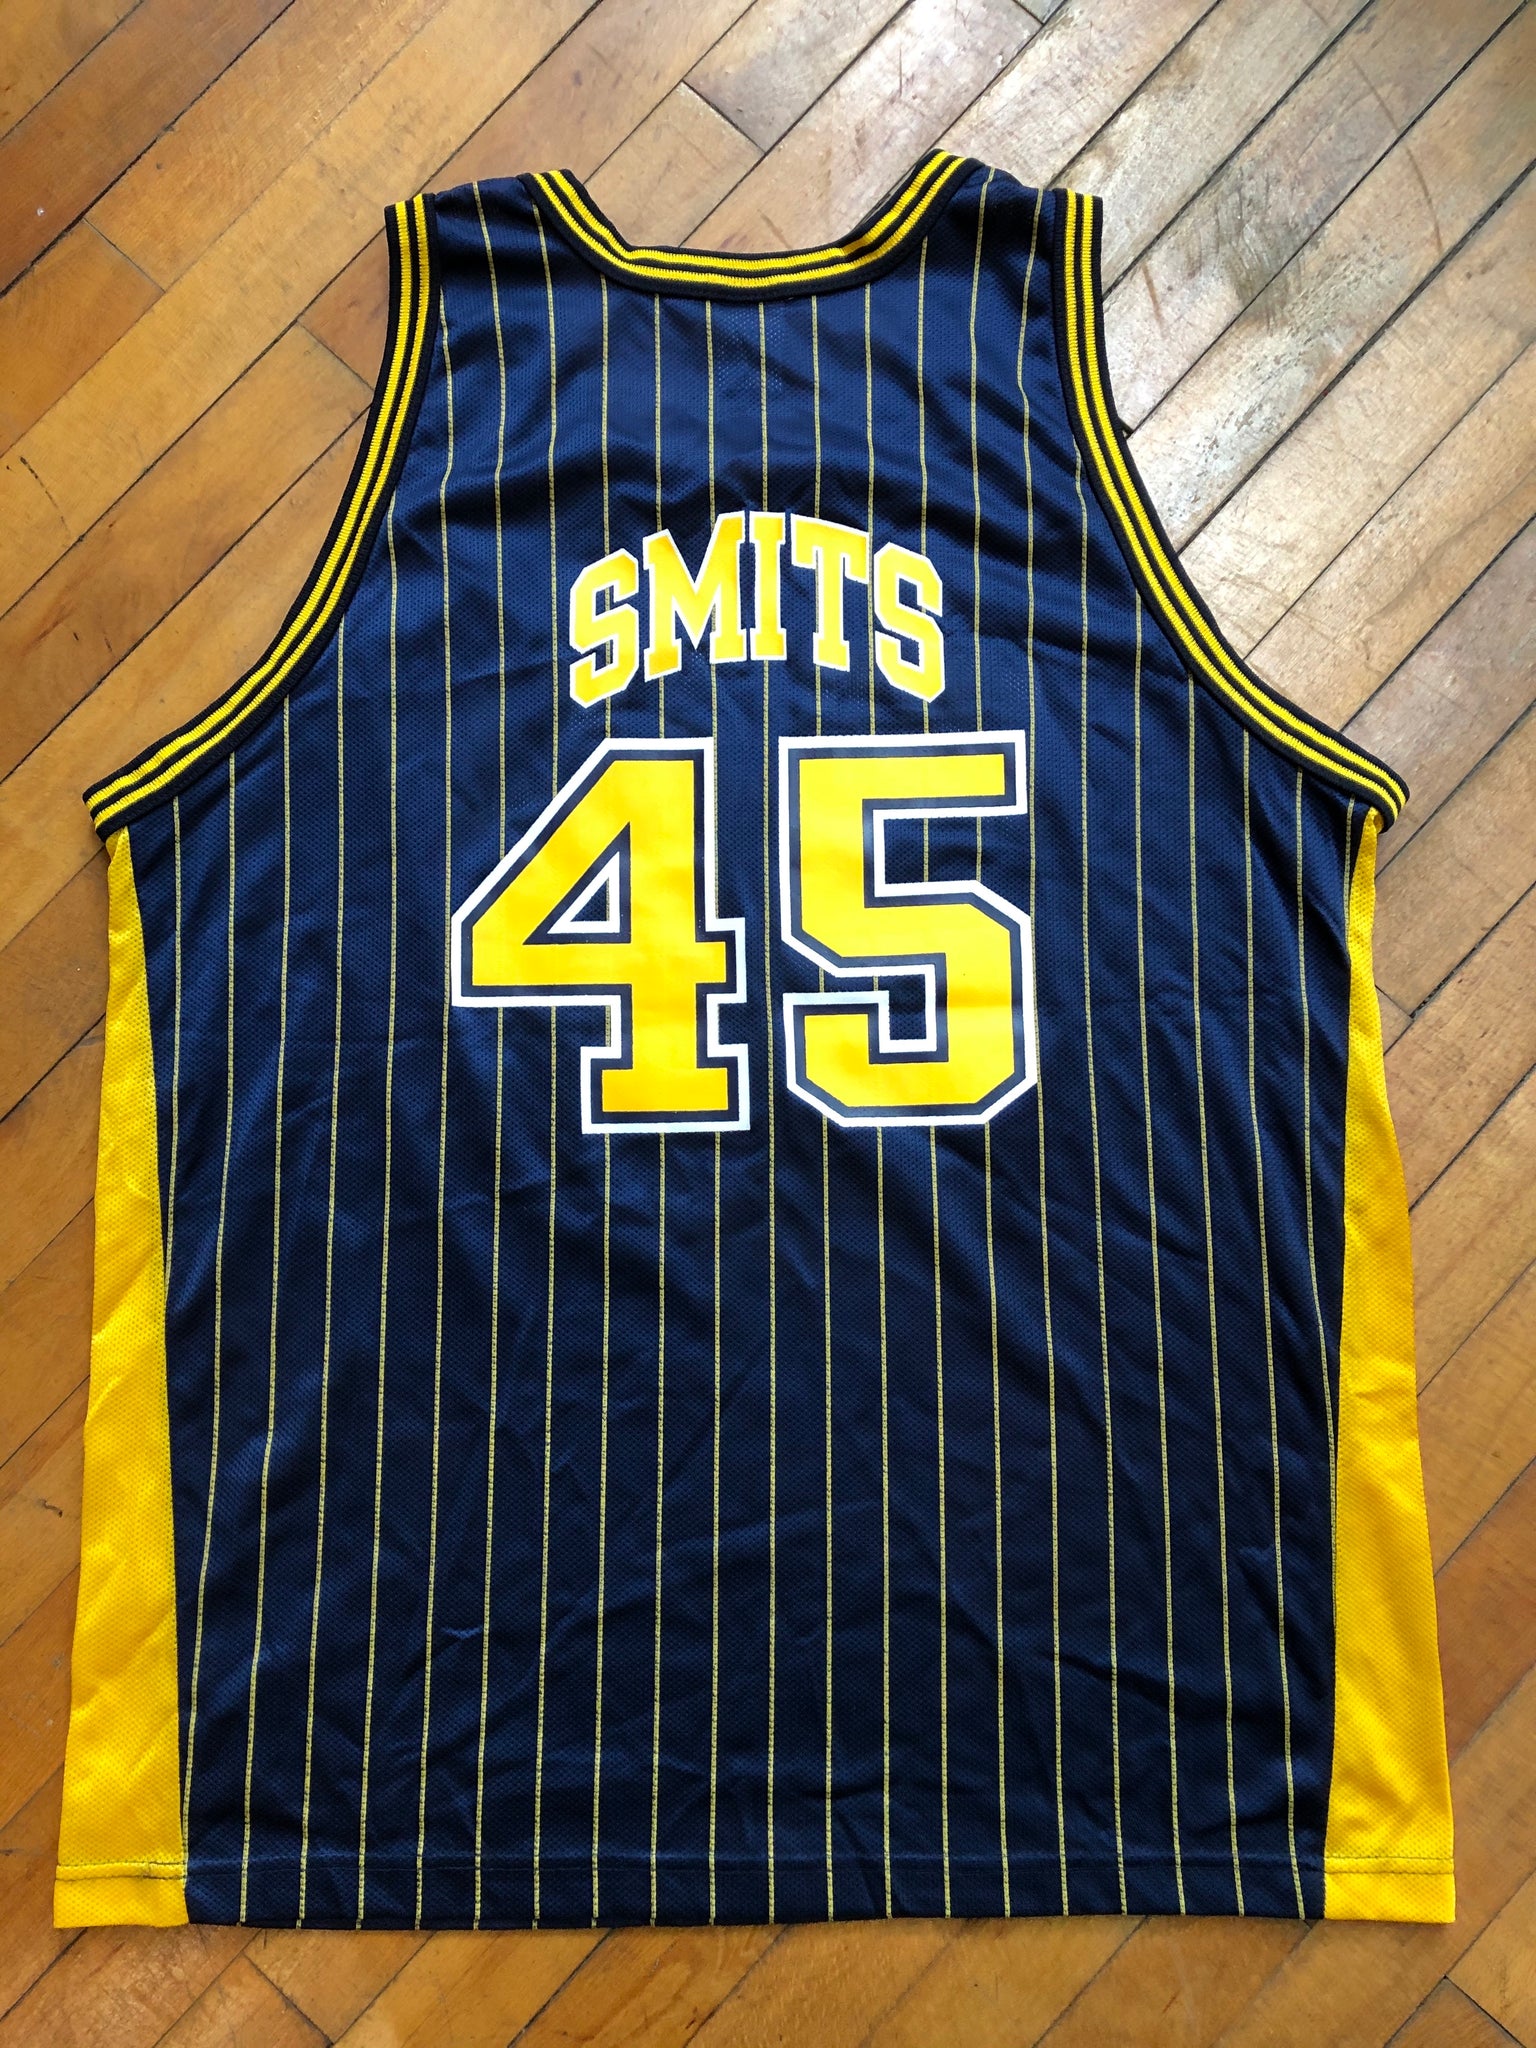 Rik Smits Indiana Pacers Basketball Jersey – Best Sports Jerseys